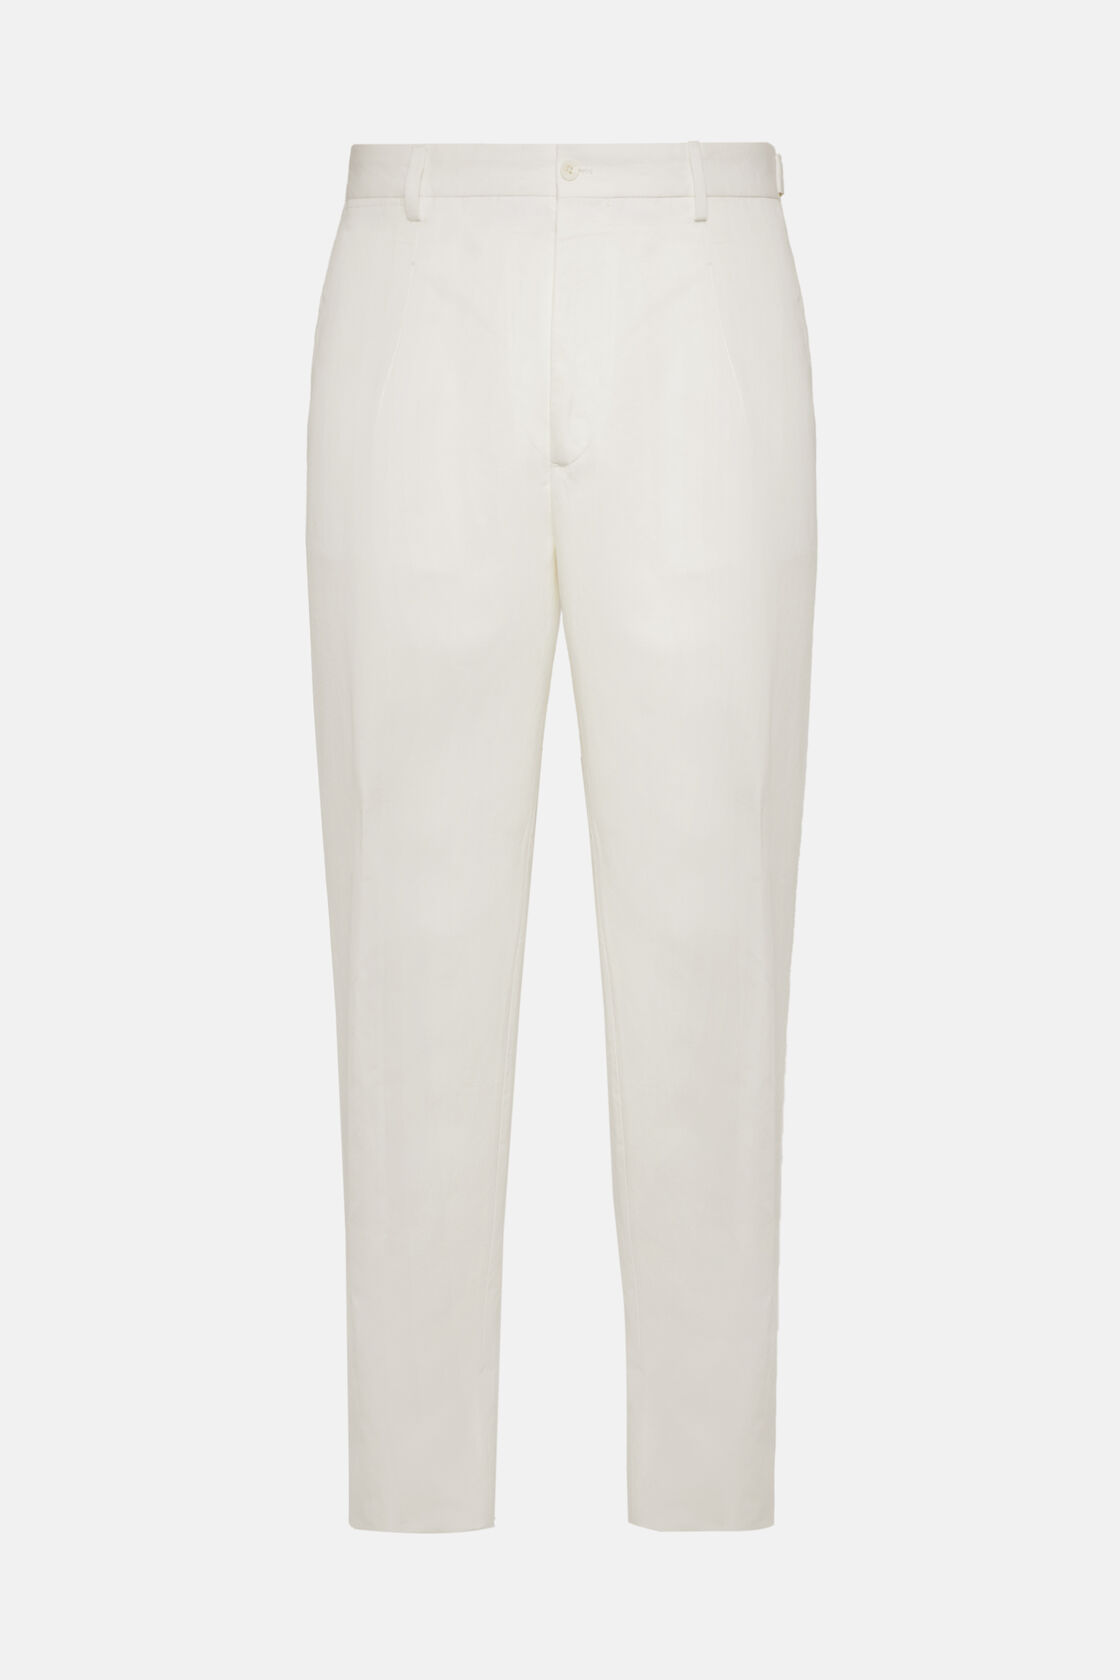 Pantalon En Coton Et Lin, Blanc, hi-res